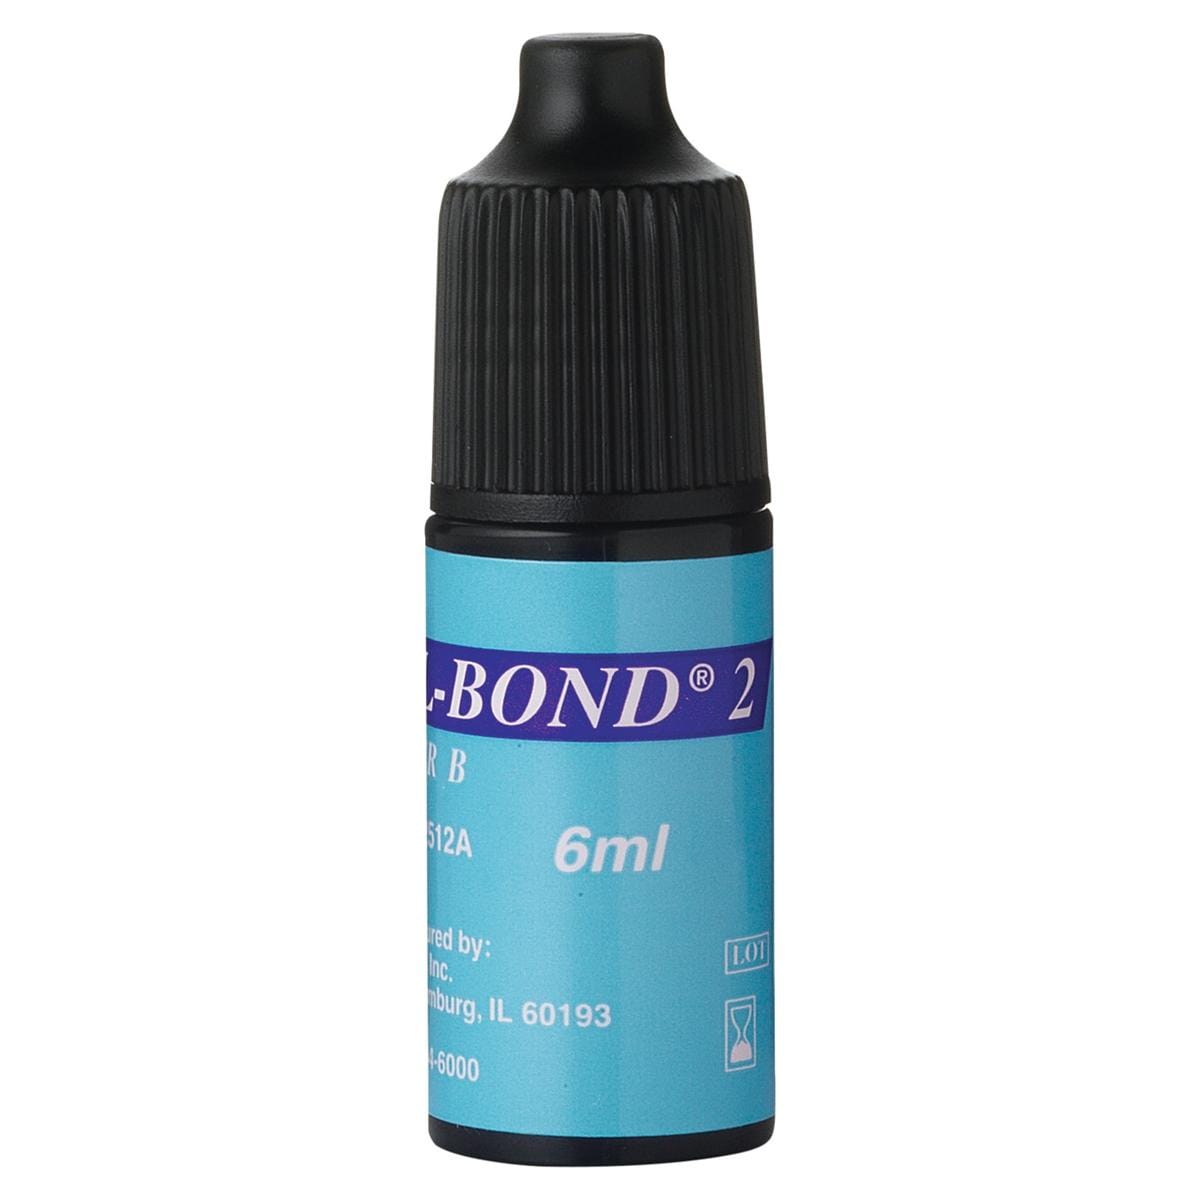 All-Bond 2 - universal dental adhesive system - Primer B, 6 ml